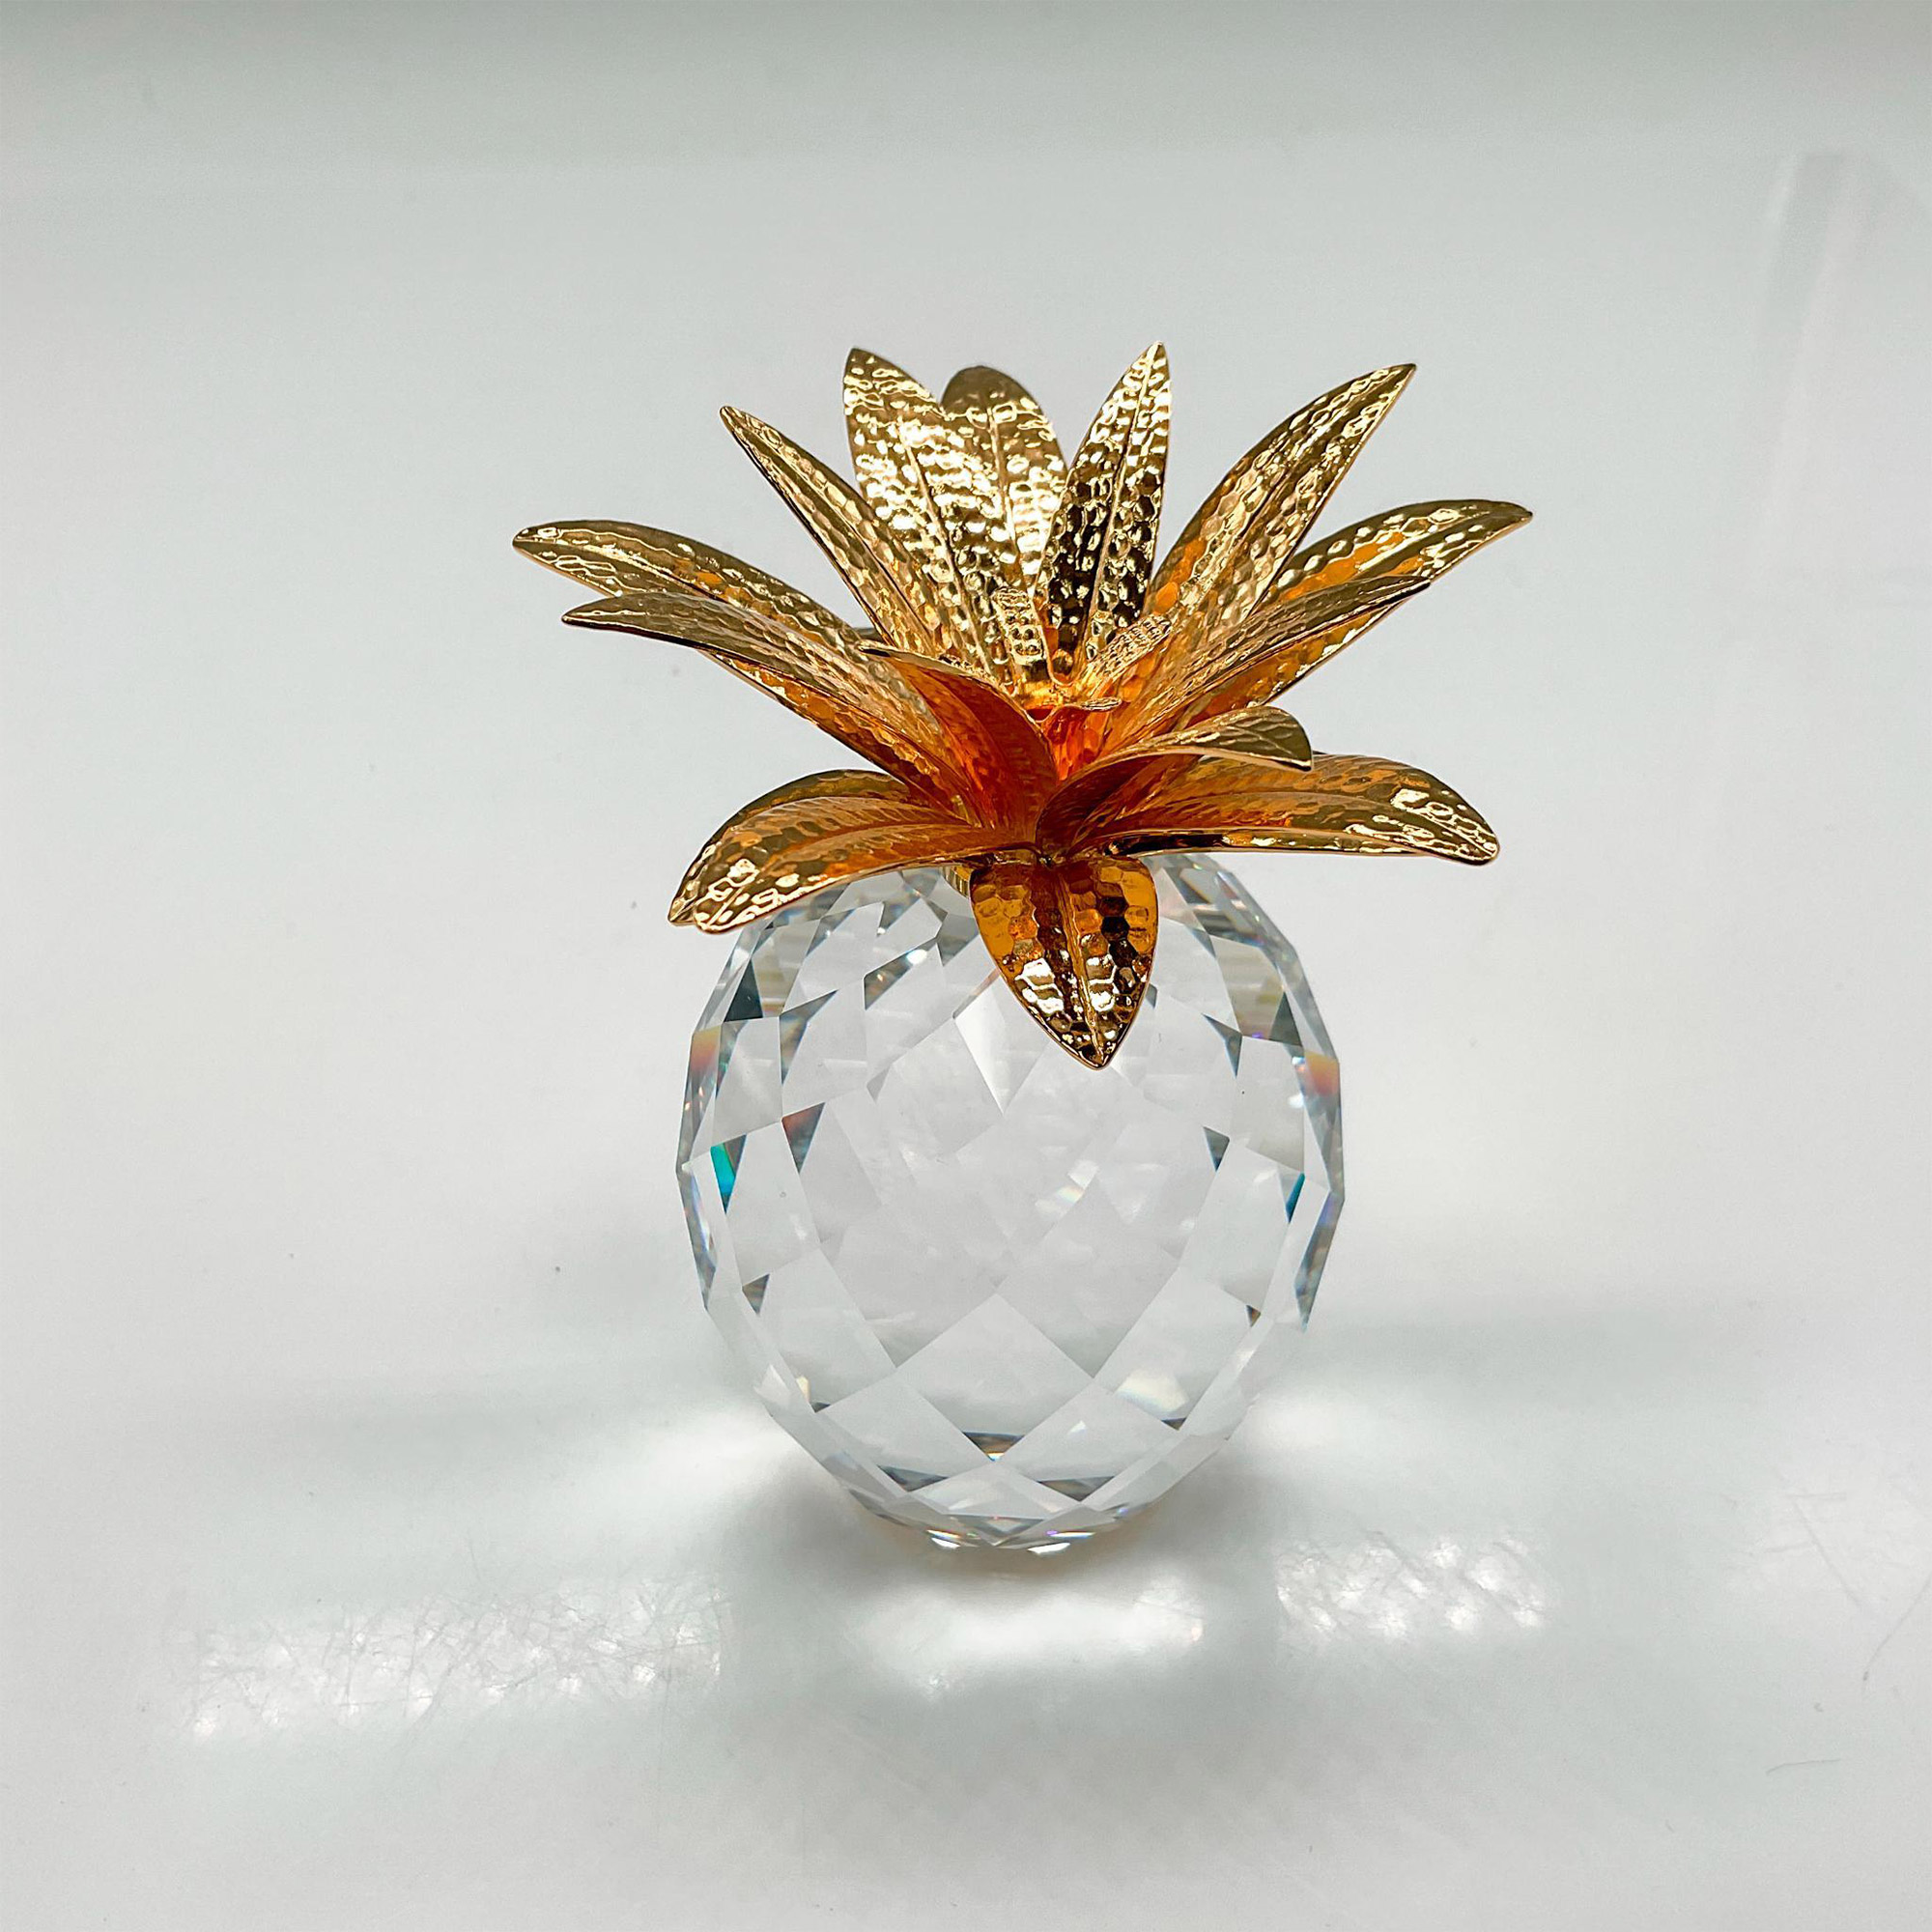 Swarovski Crystal Figurine, Pineapple - Image 2 of 4